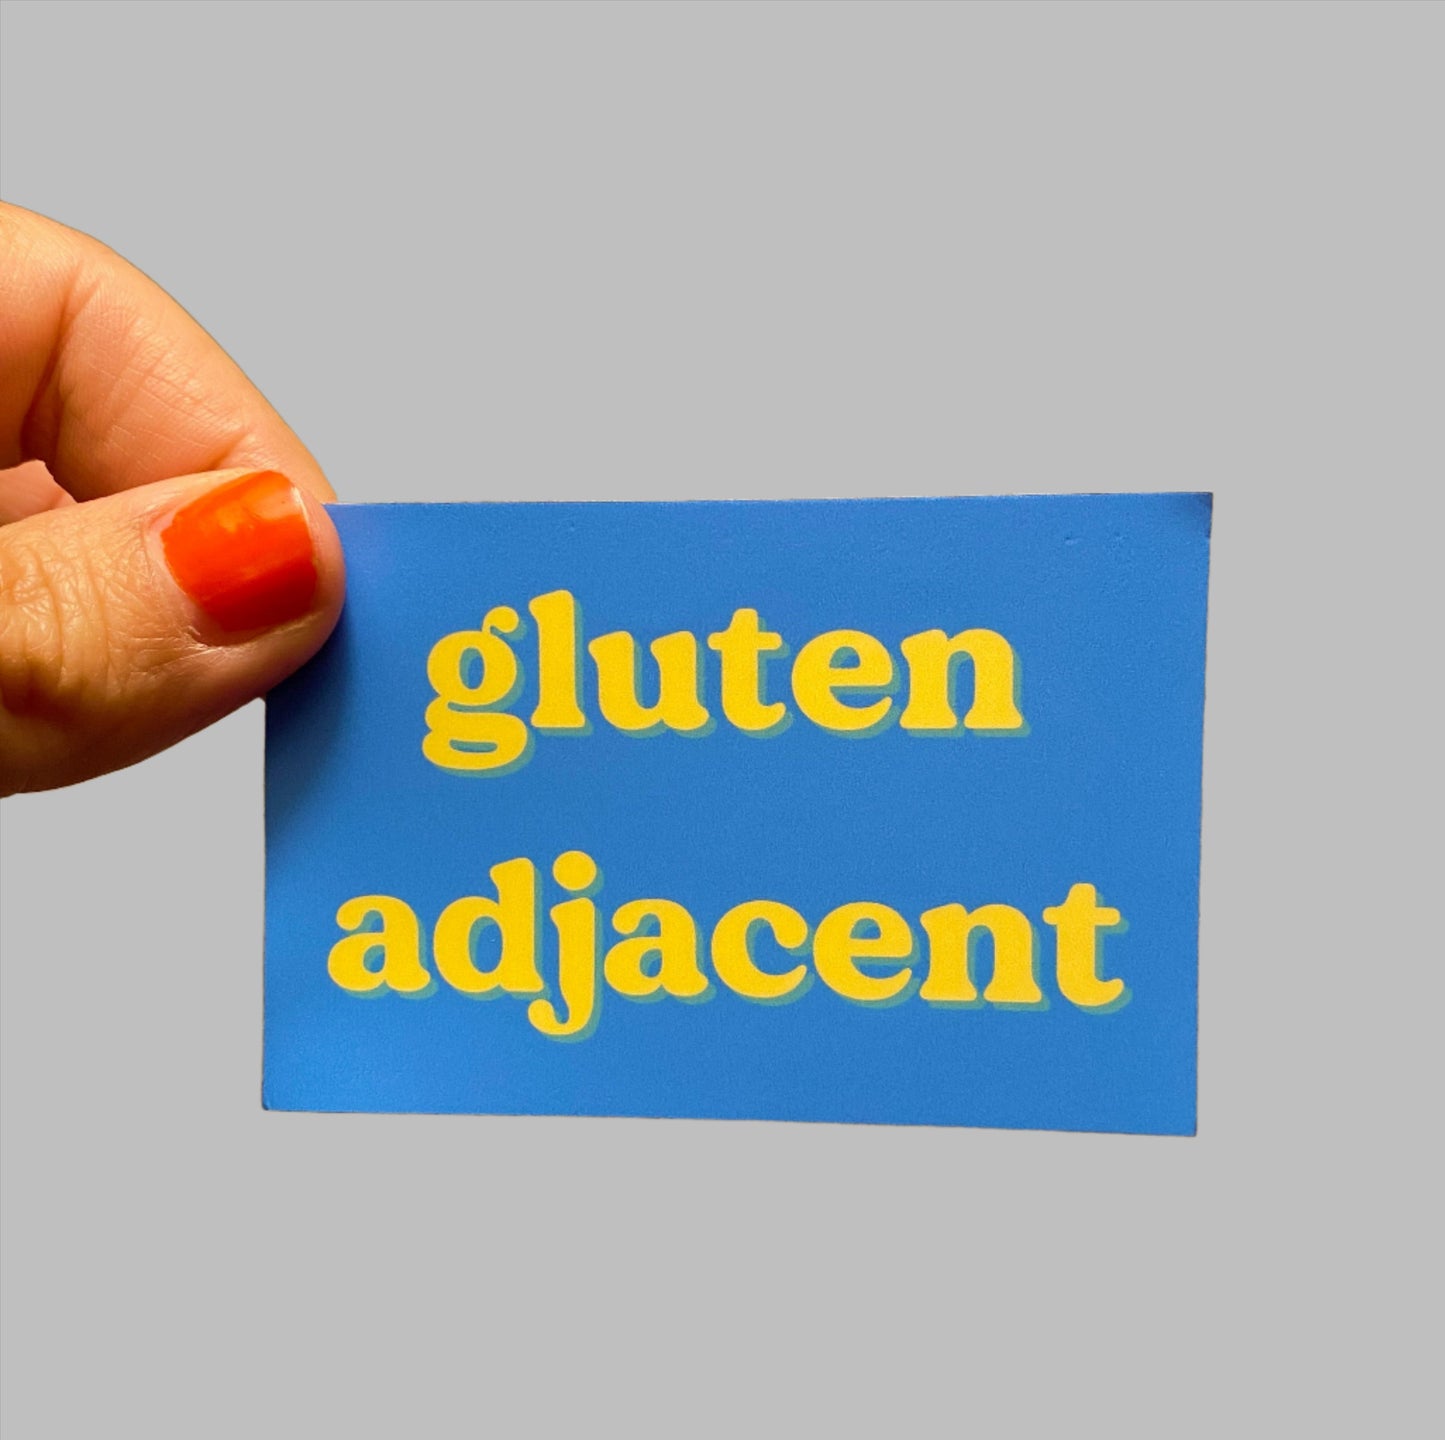 Gluten Adjacent